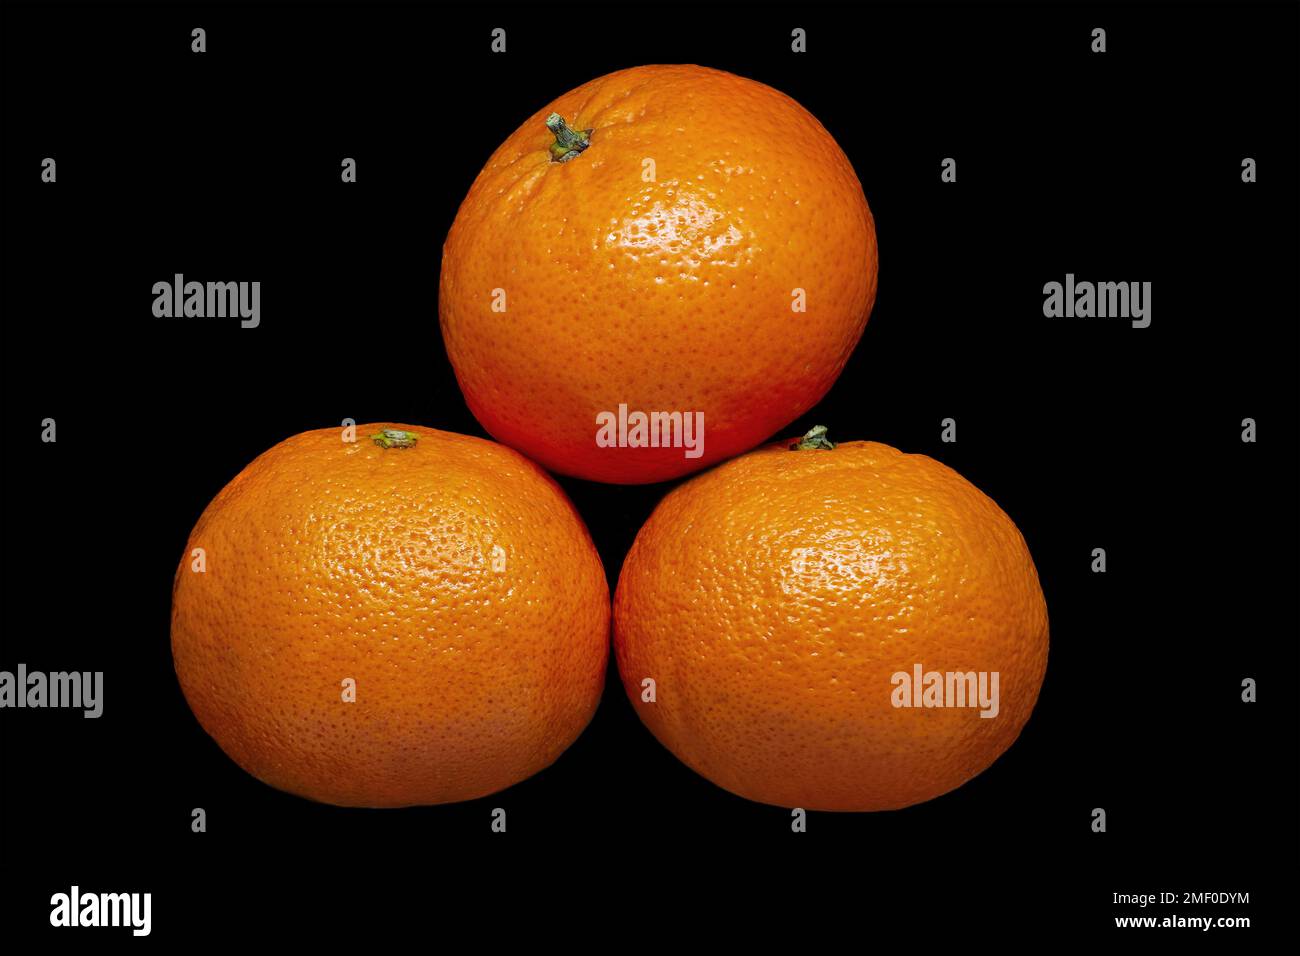 Image of three ripe tangerines on black background Stock Photo